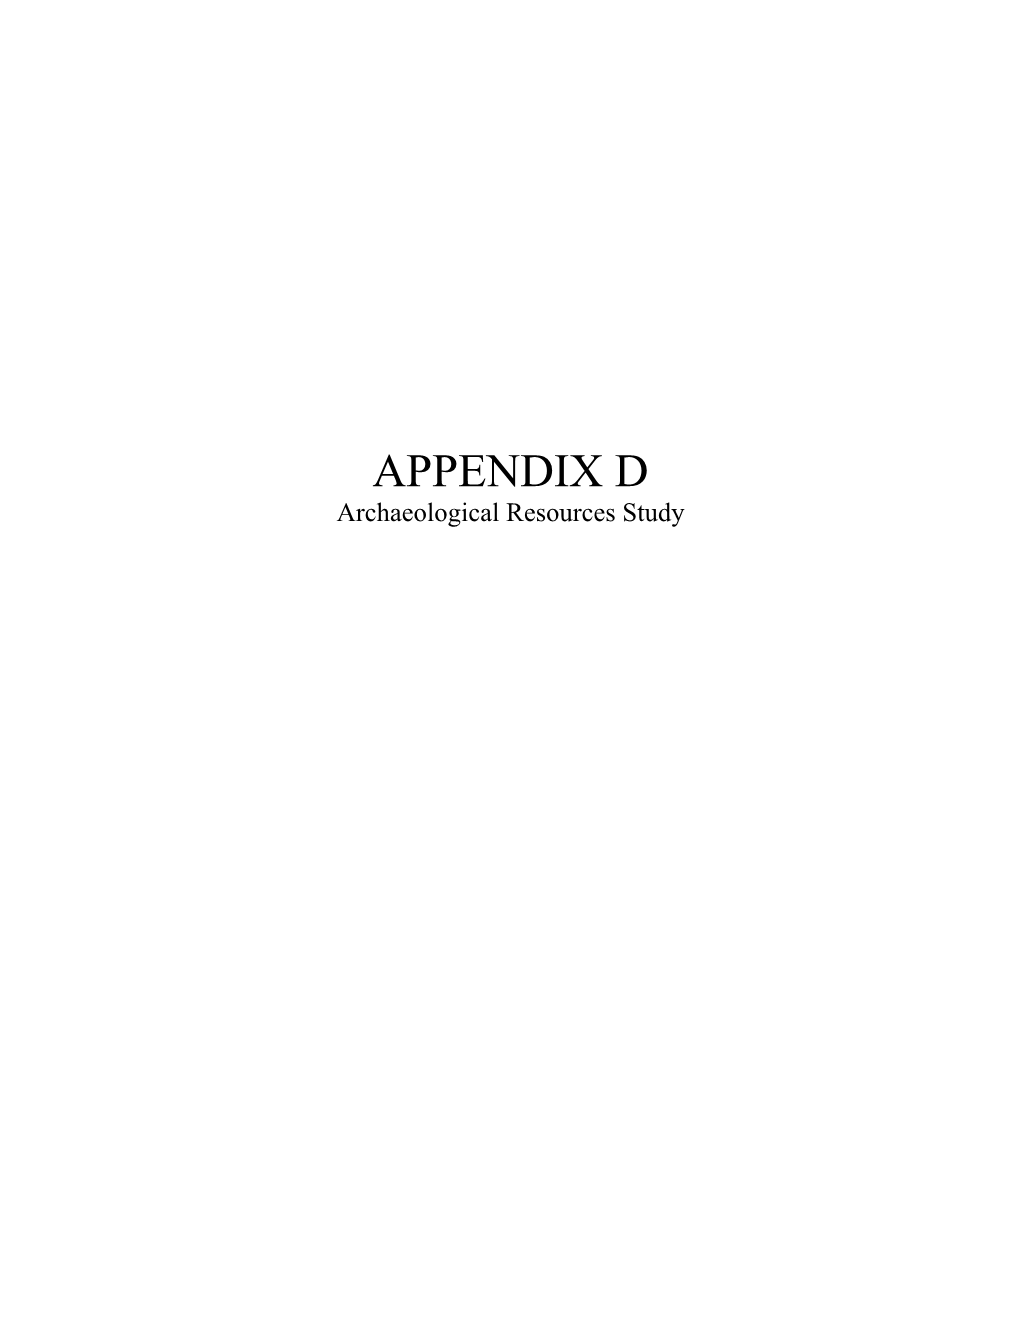 APPENDIX D Archaeological Resources Study